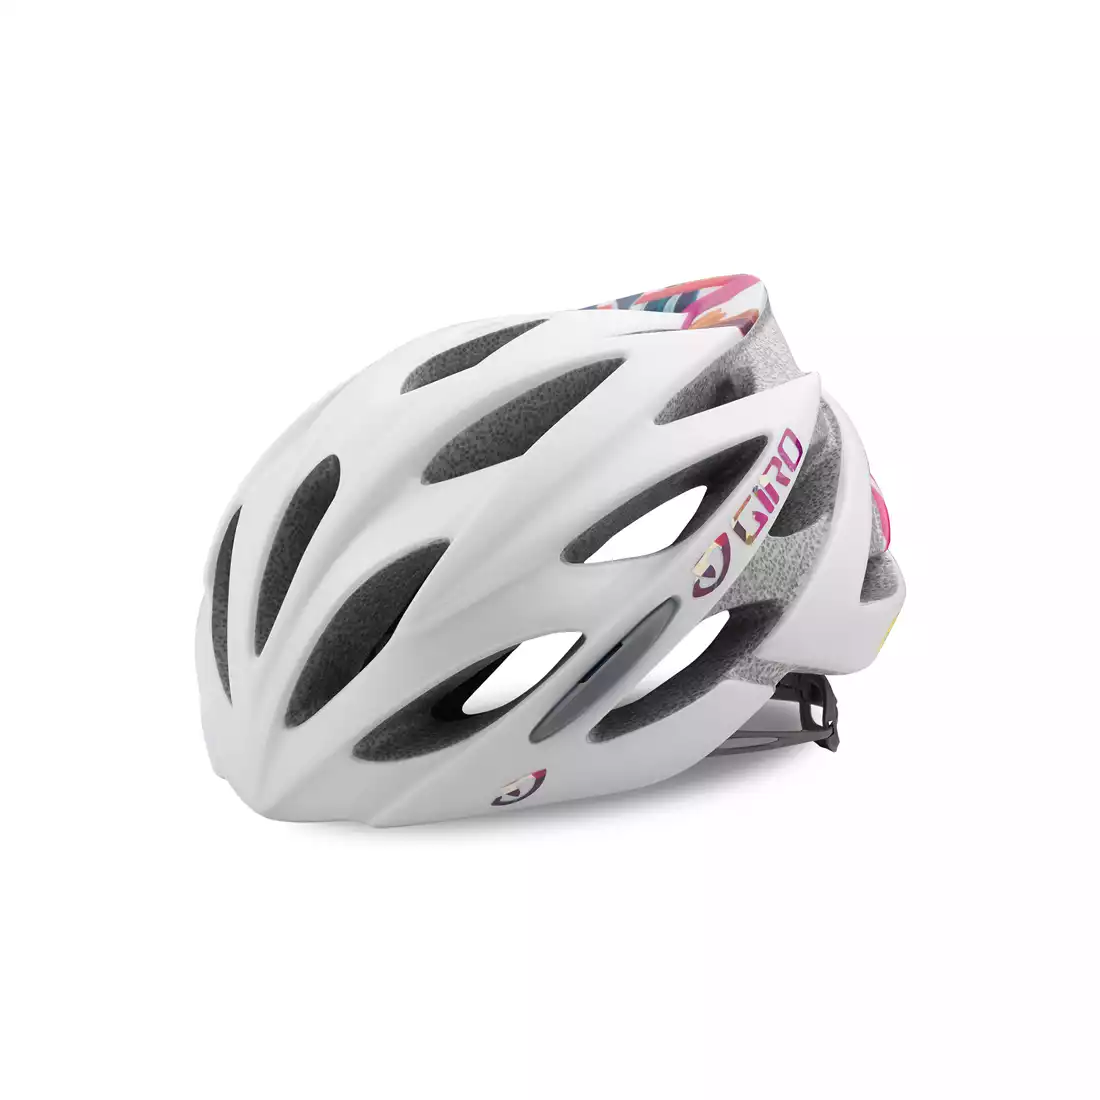 GIRO SONNET - damski kask rowerowy biały mat